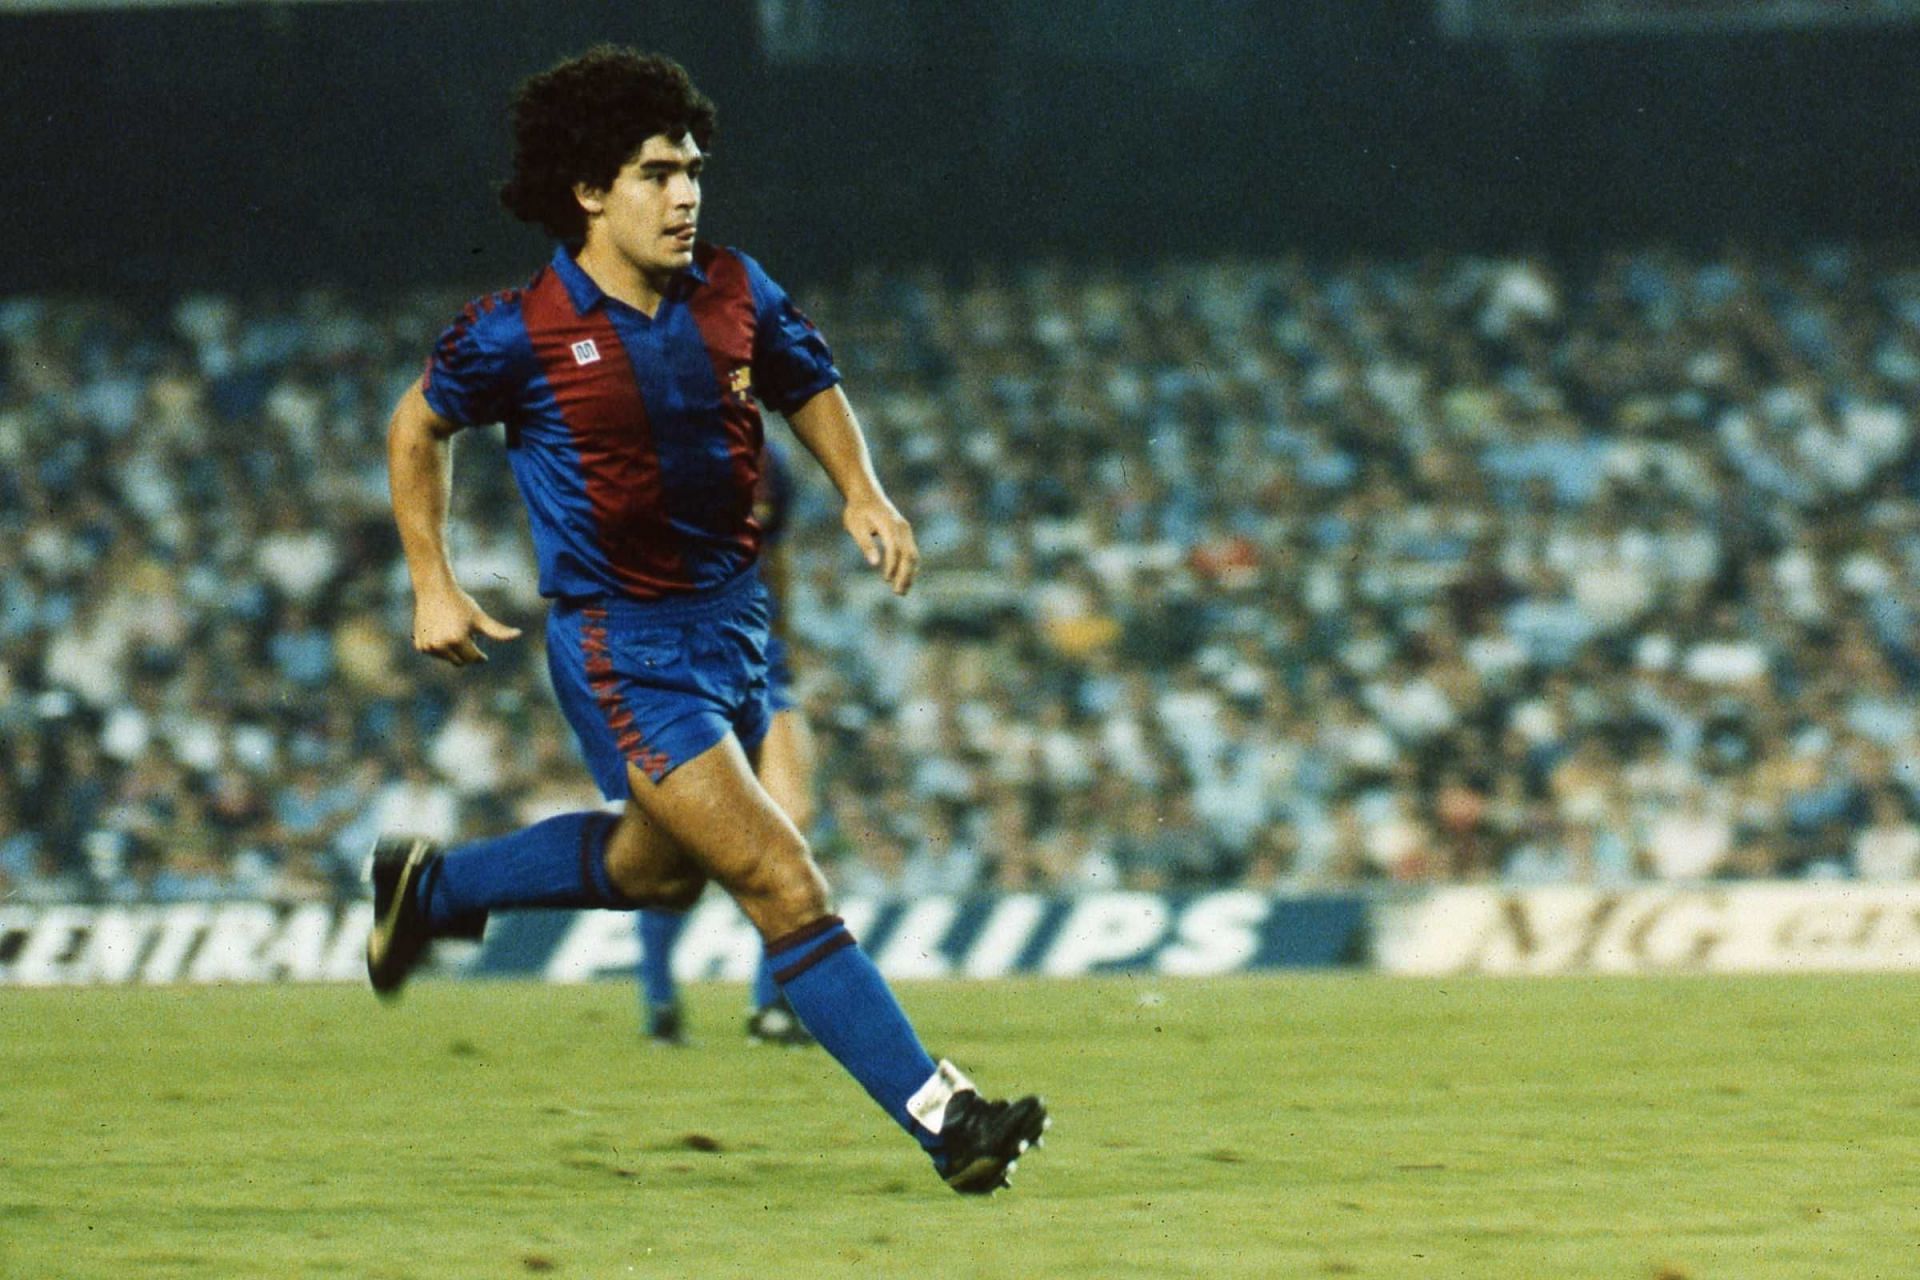 Diego Maradona in action (cred: FC Barcelona)